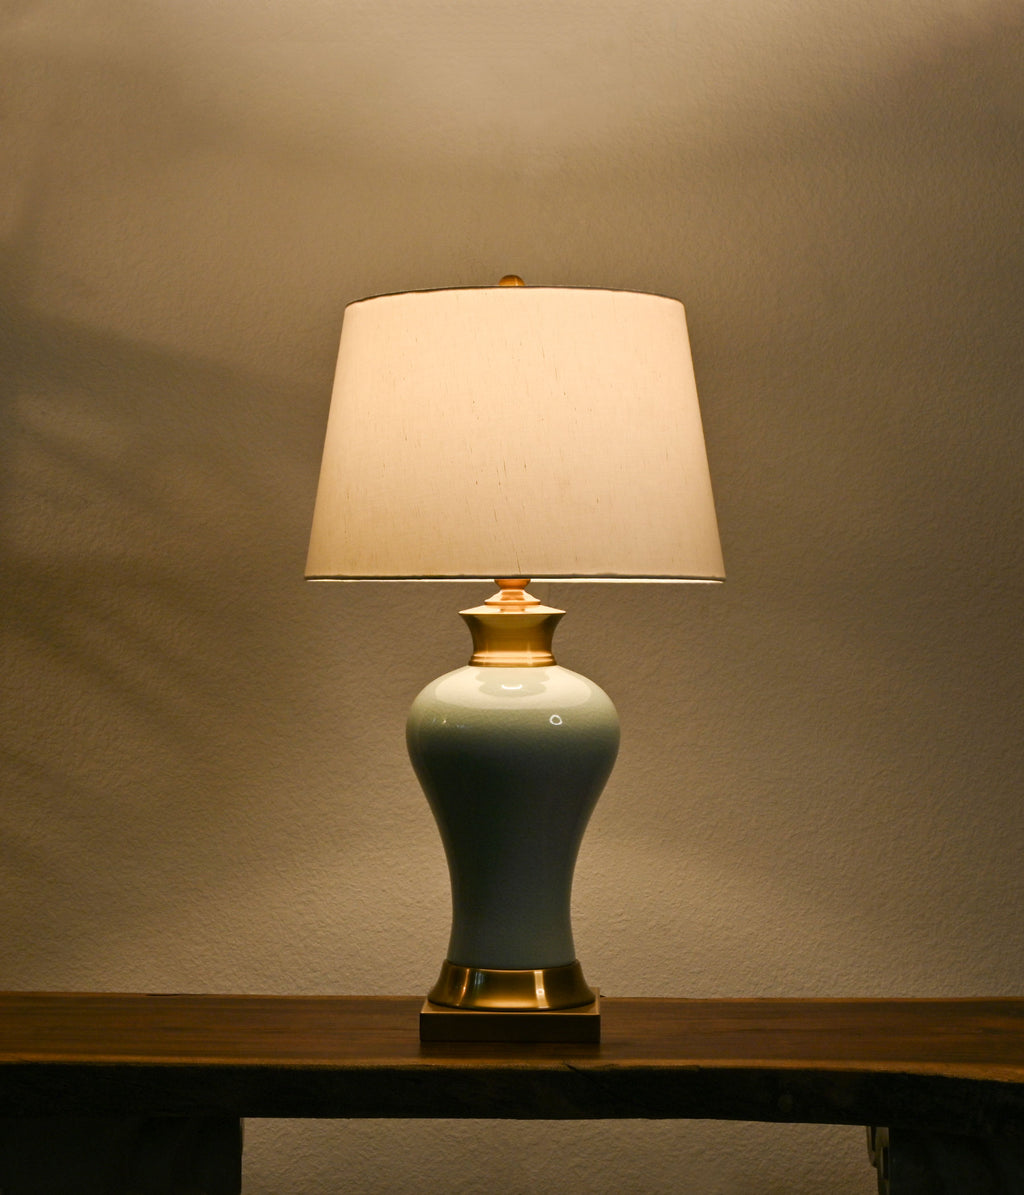 Clay Oasis Illuminator off white shade lamp